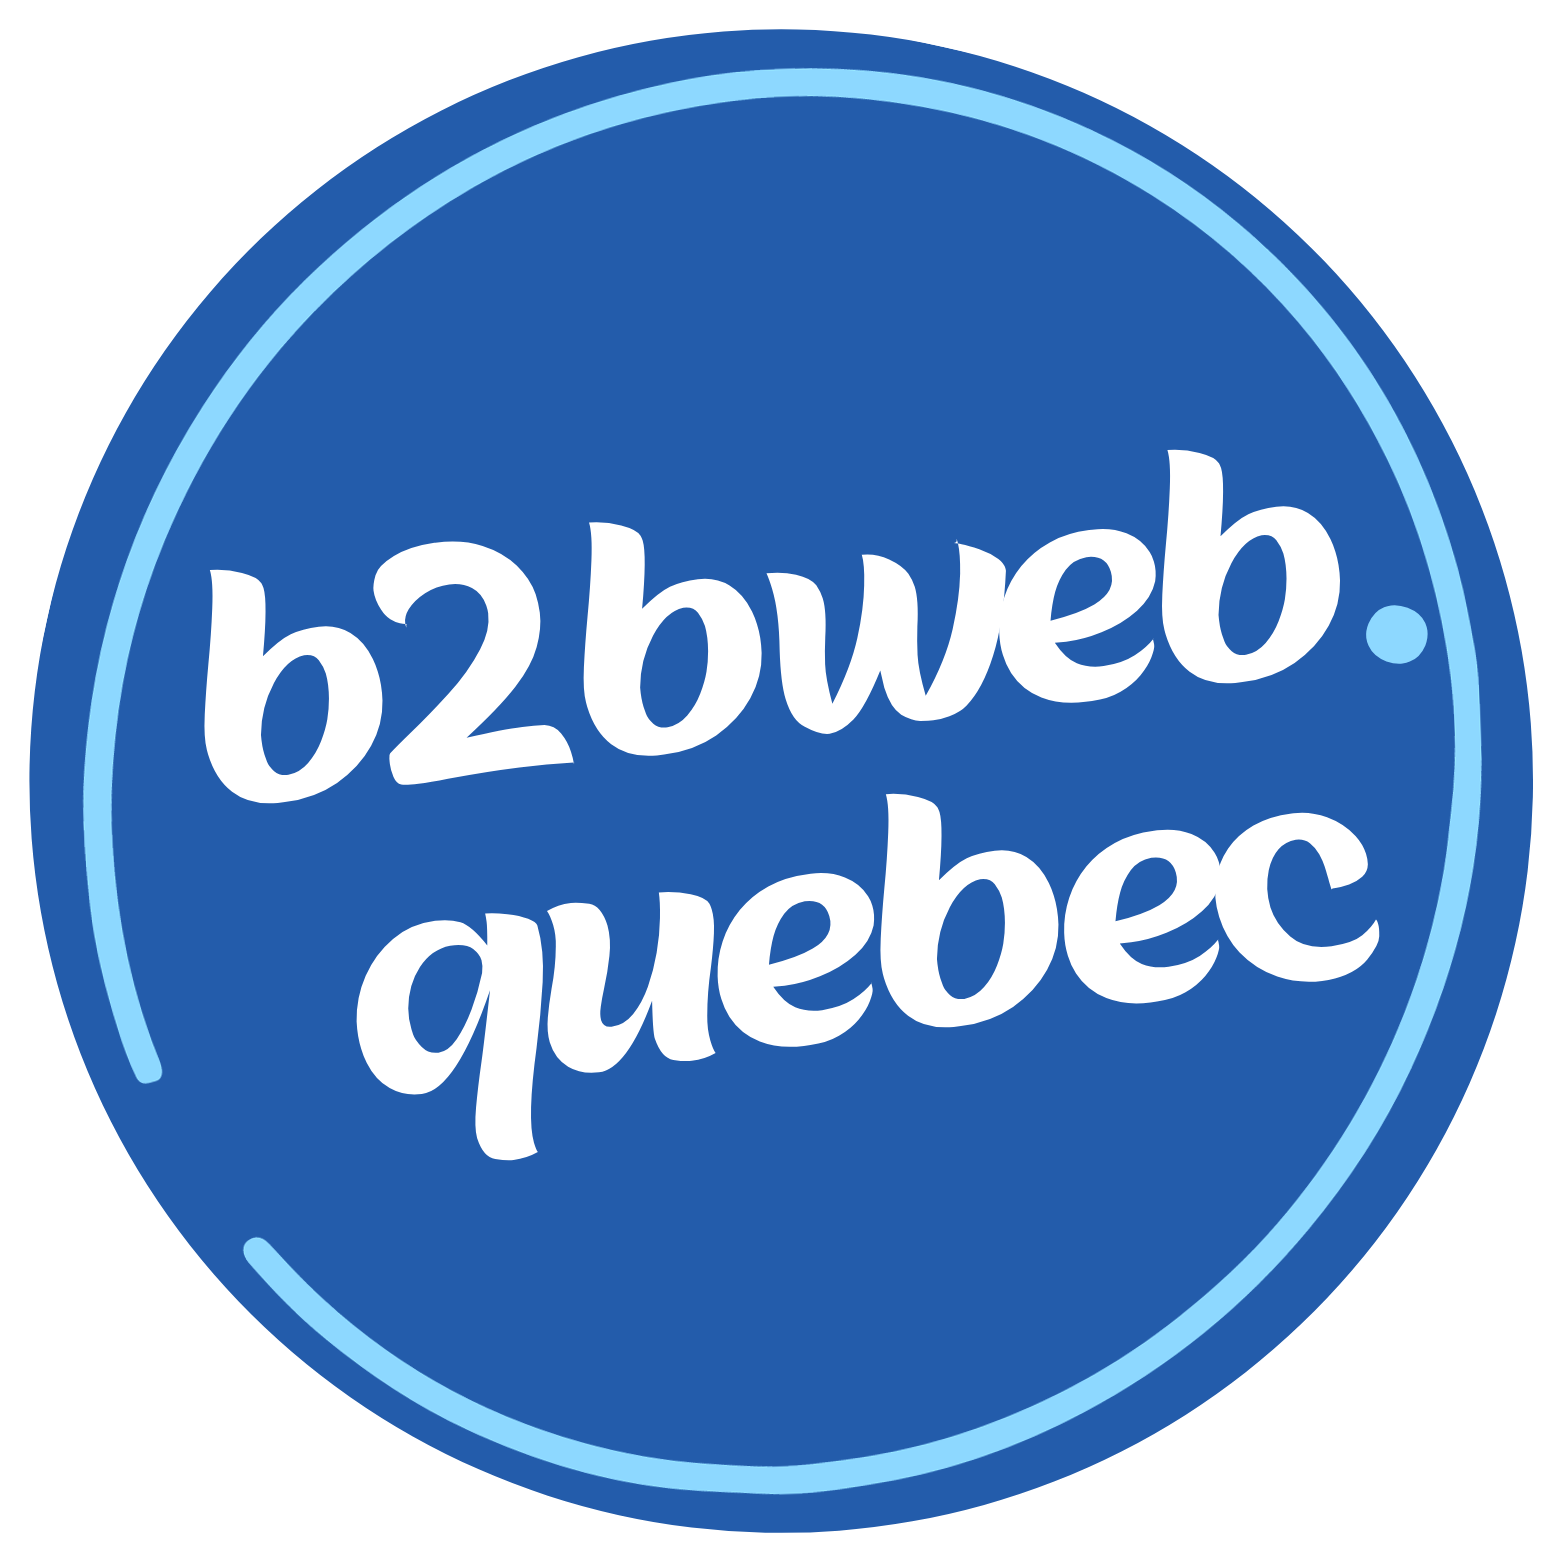 Web Agency b2bweb.quebec